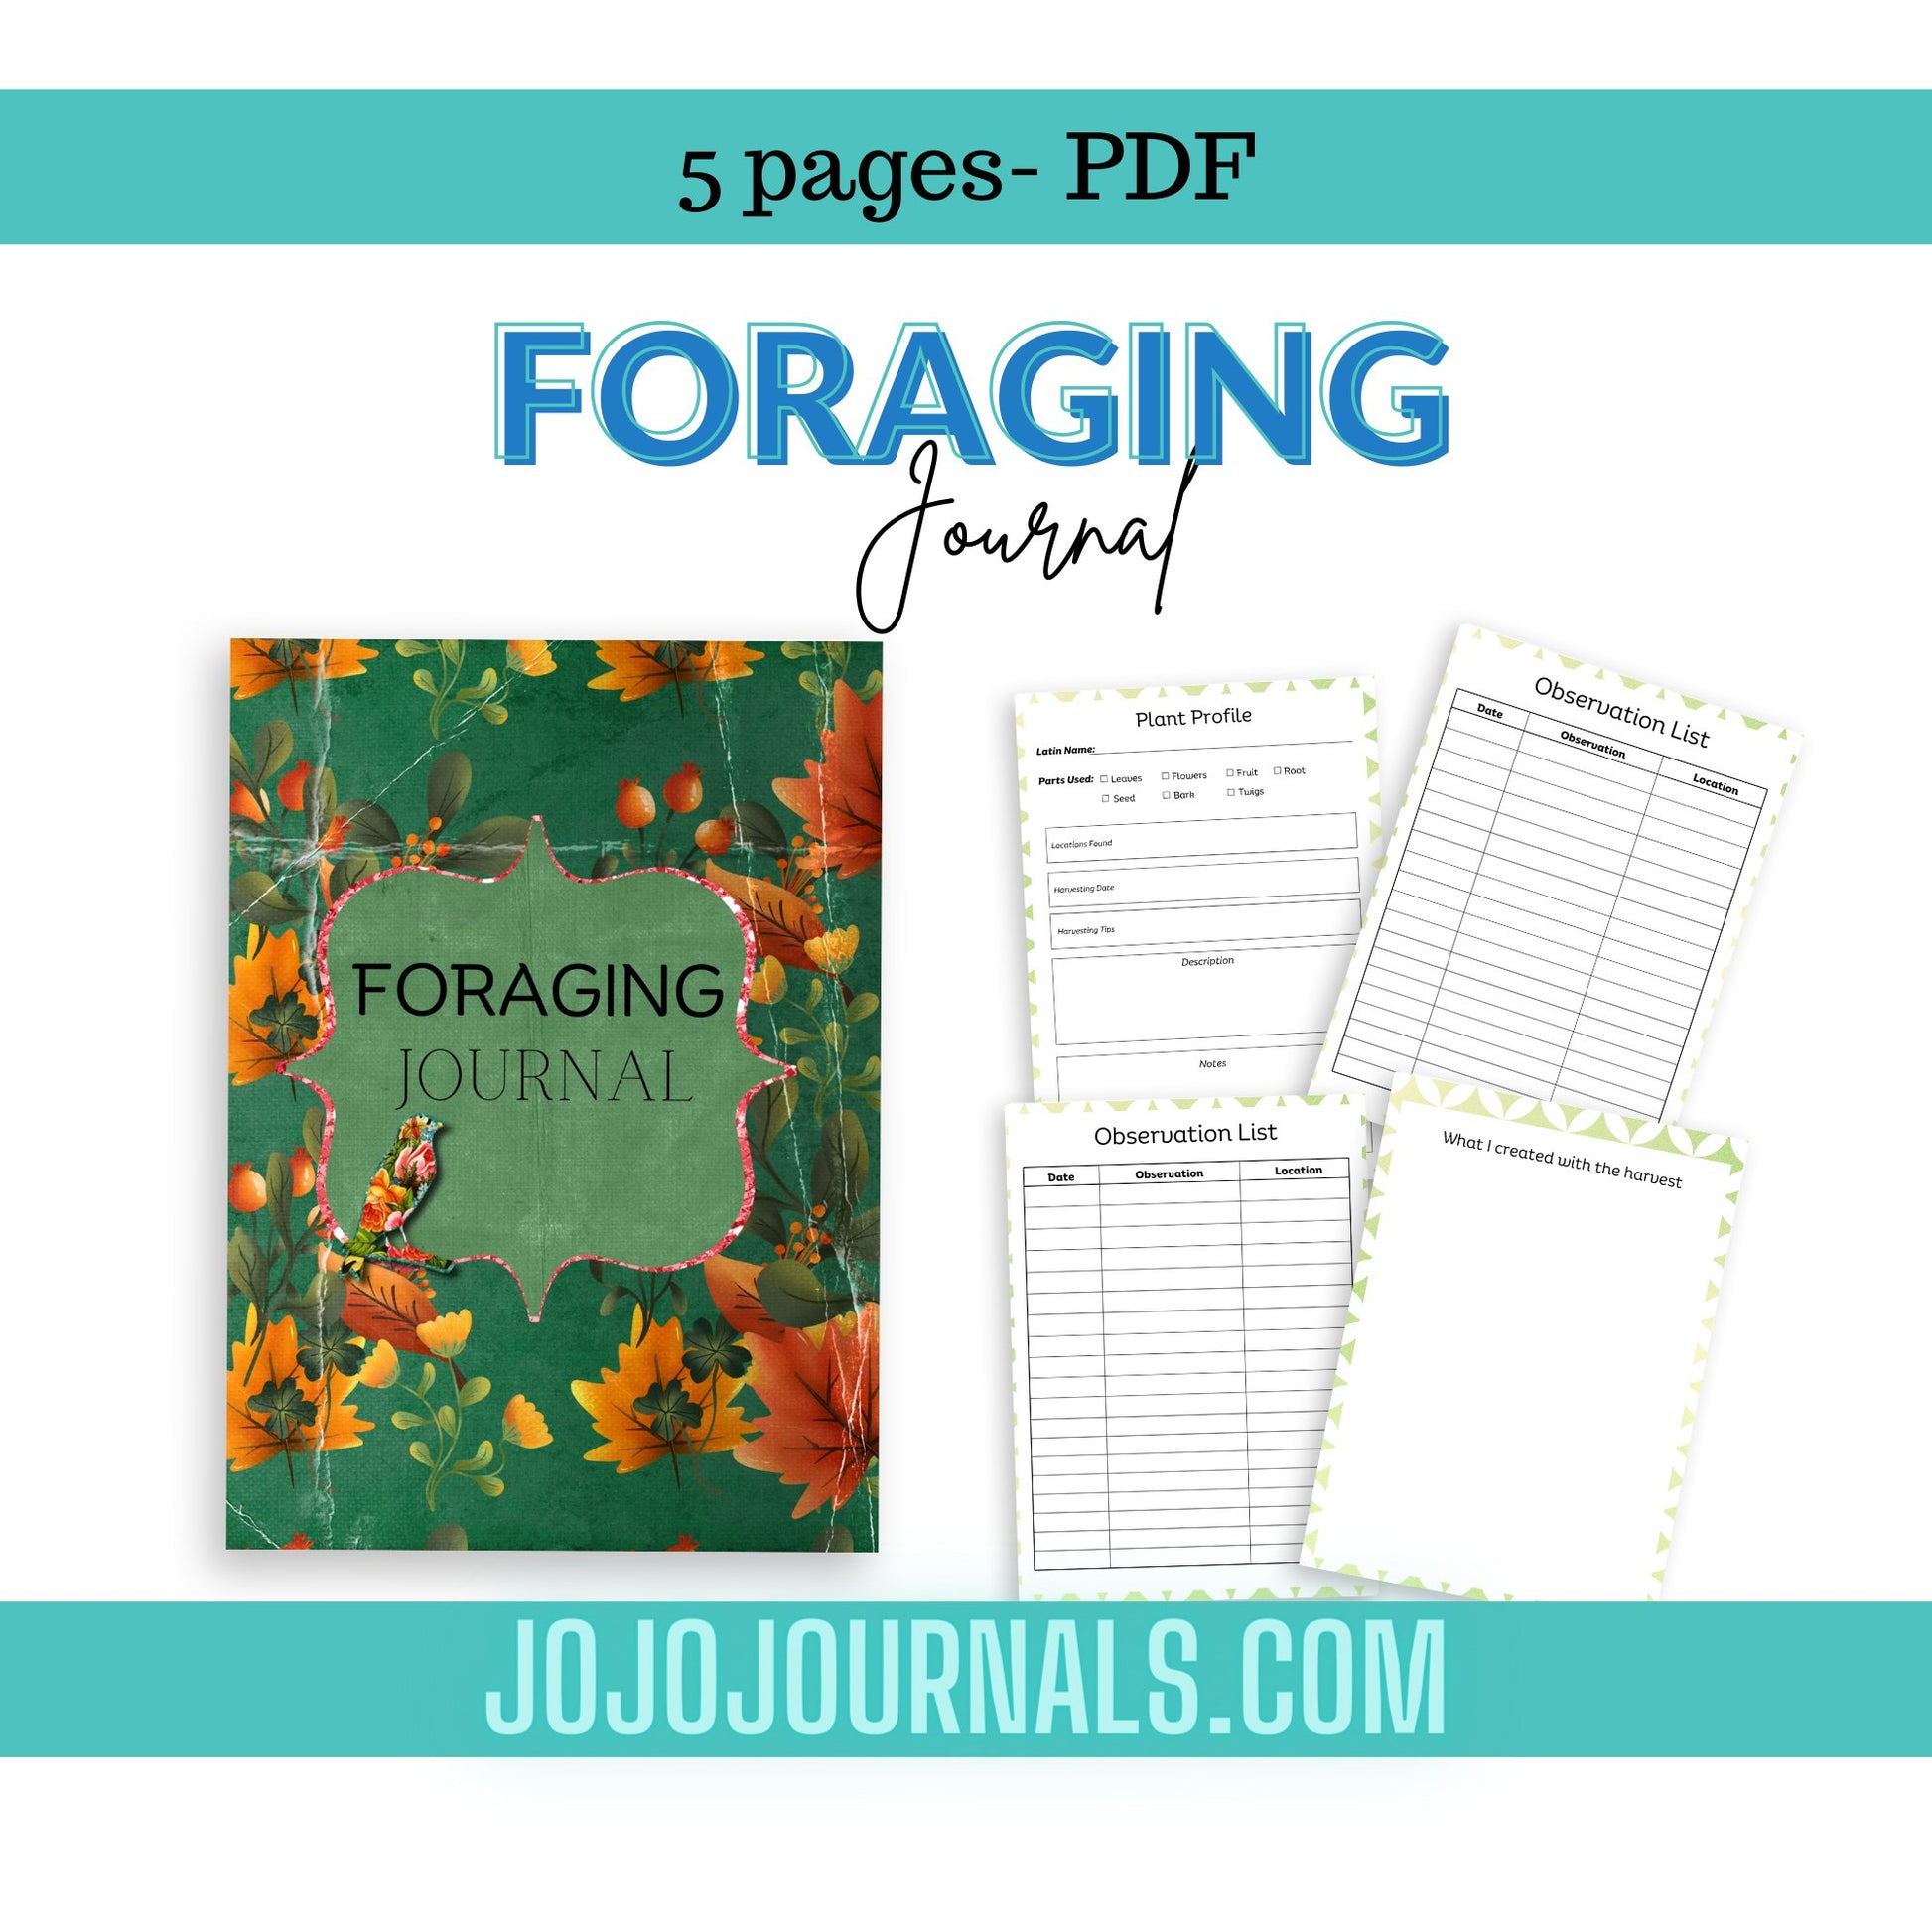 Foraging Journal - Fiesta By JoJo Journals